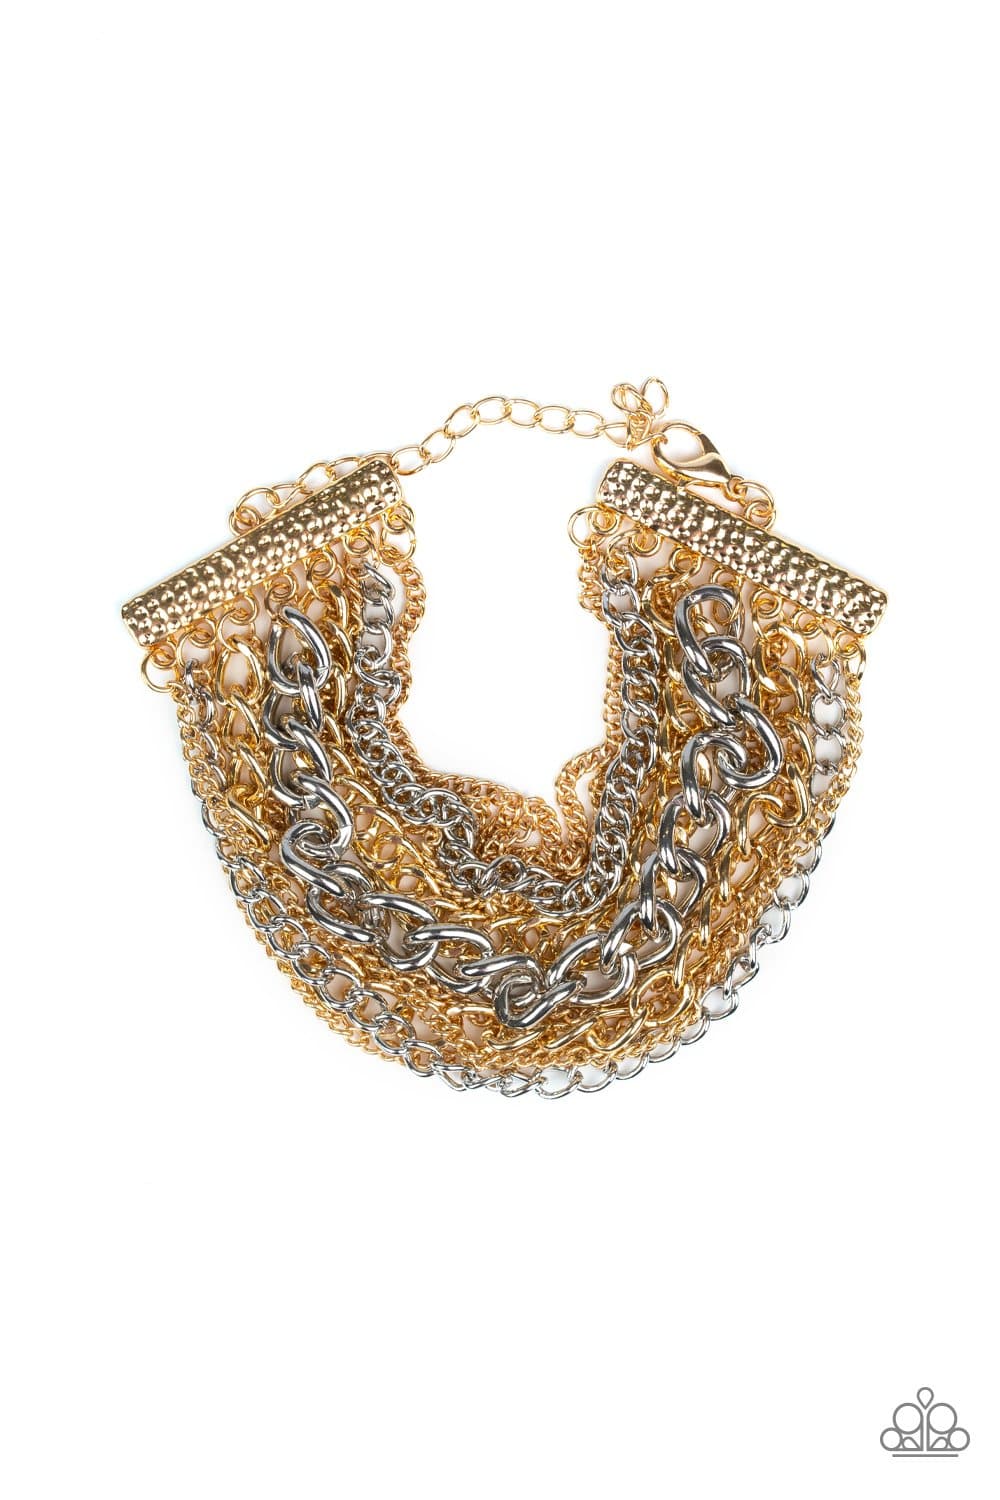 Metallic Horizon - Gold & Silver Chain Bracelet - Paparazzi Accessories - GlaMarous Titi Jewels